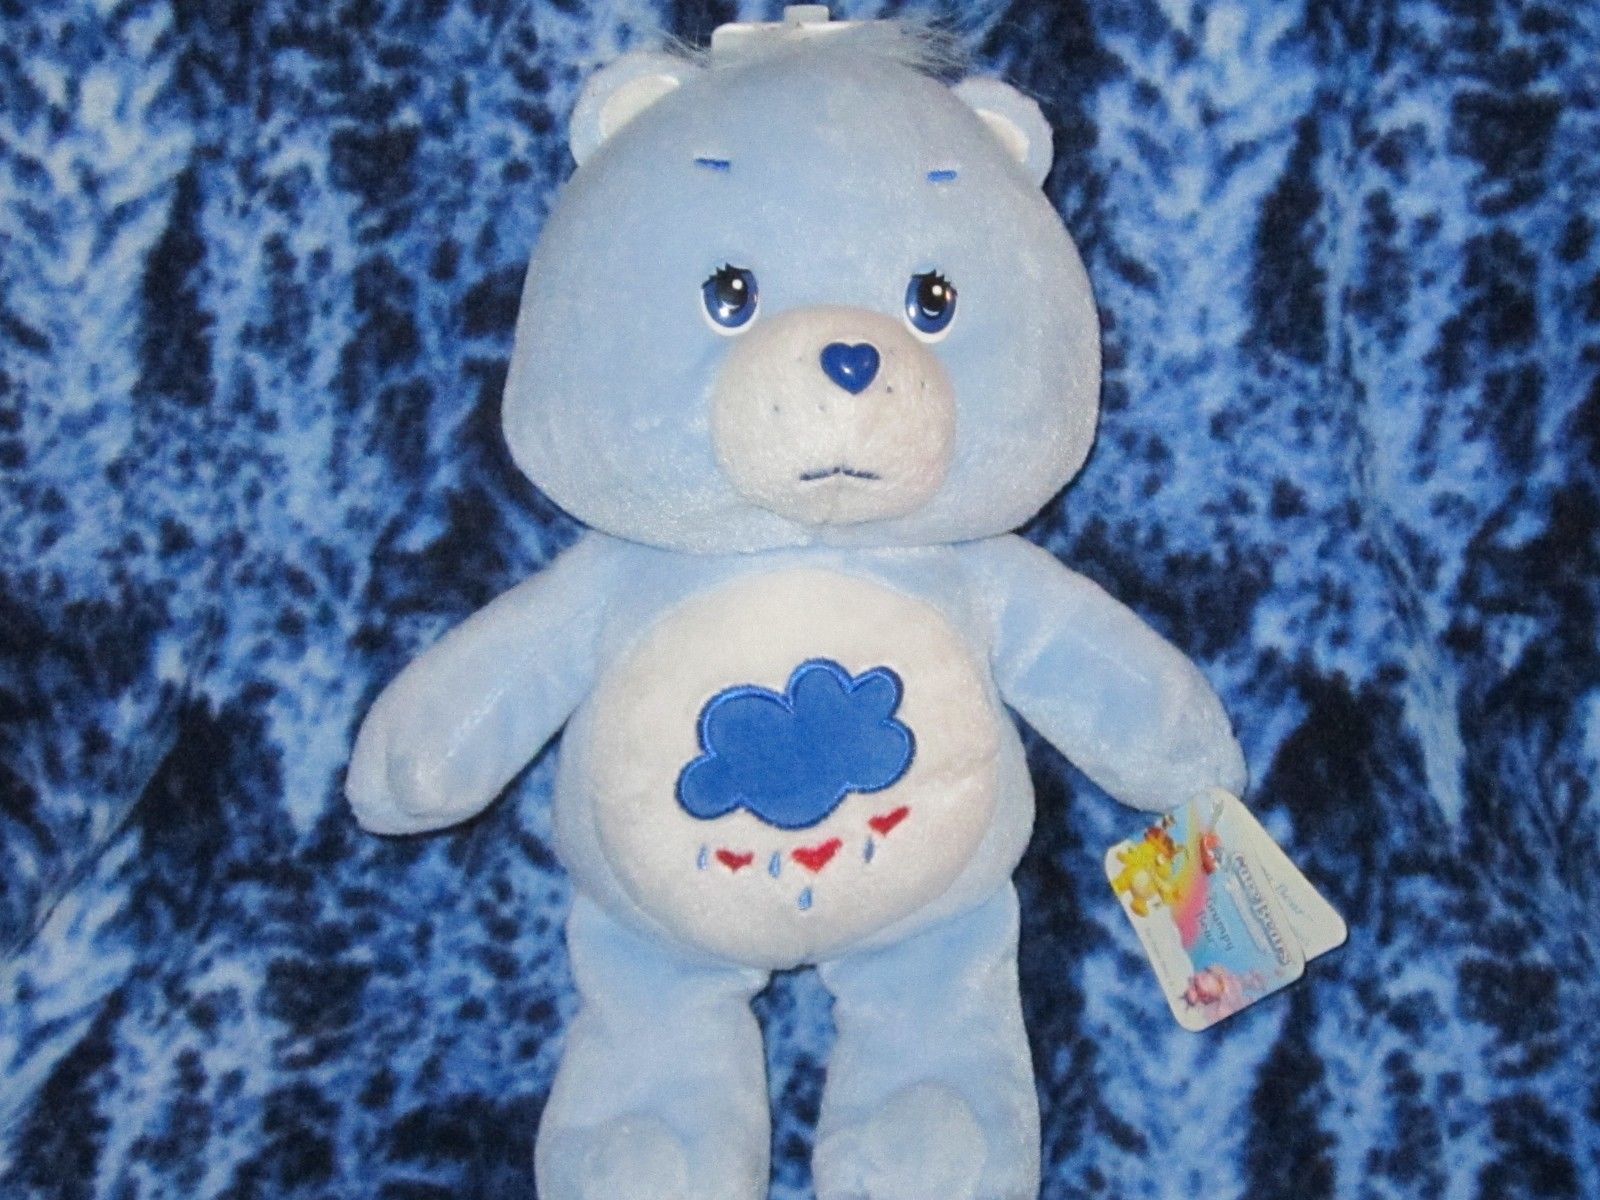 Care Bears Grumpy Bear Plush Toy Tag 2004 Blue Cloud Red Heart Cartoon Animal 